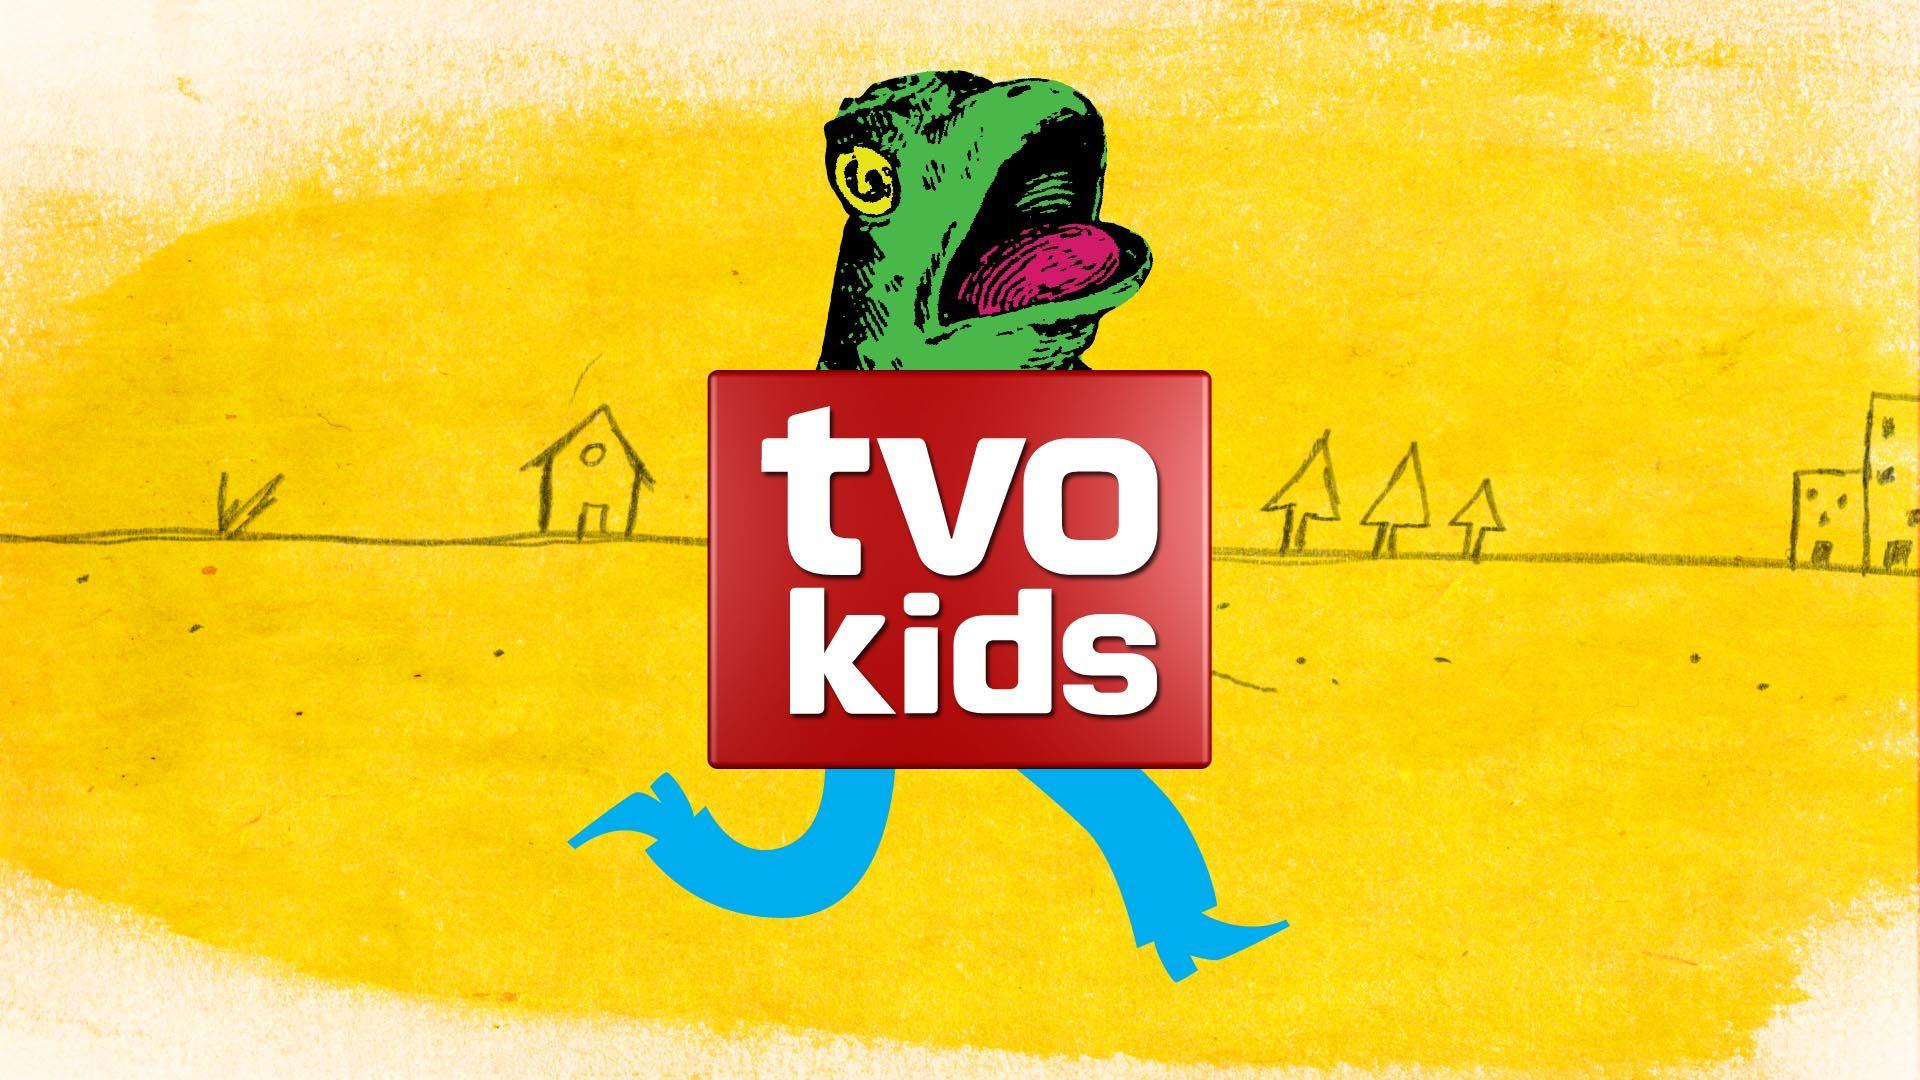 TVOKids Logo - TVO Kids | Rebrand | .::Hector Herrera::.